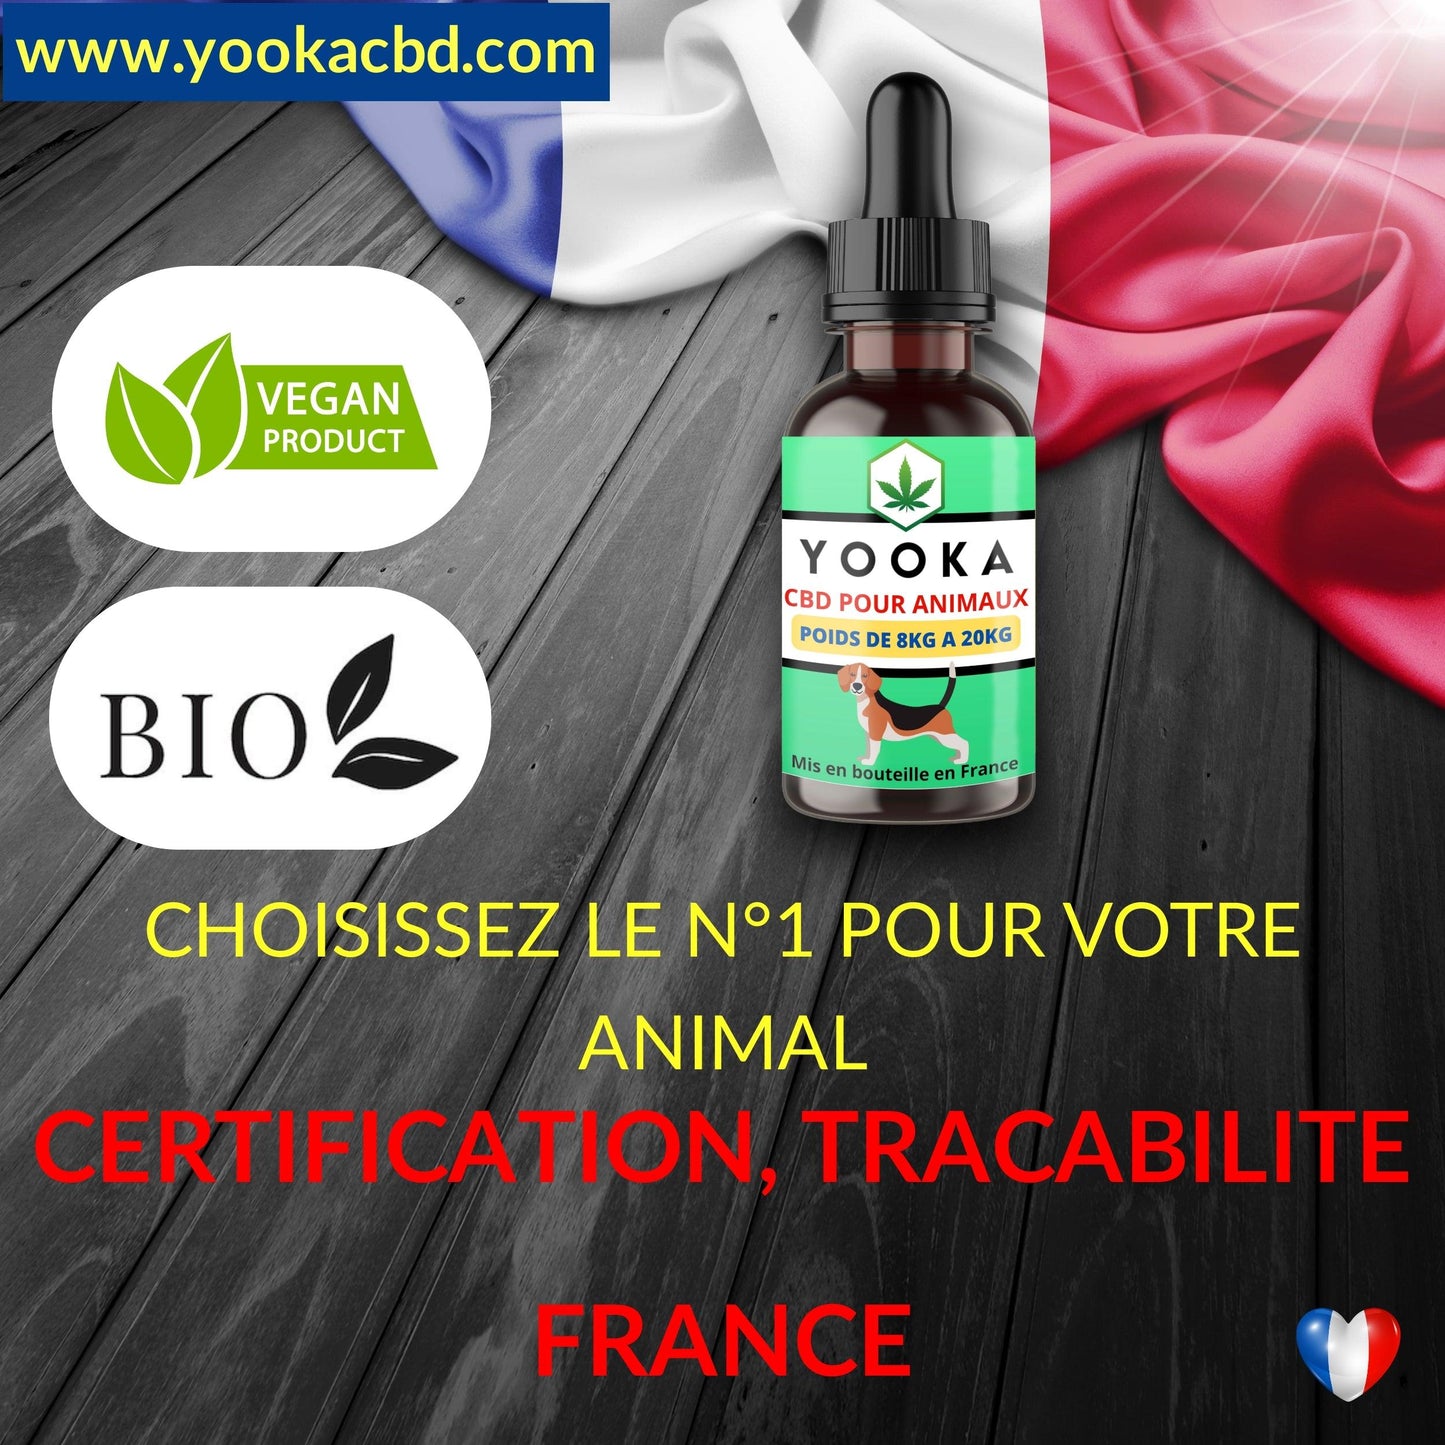 yooka_yookacbd.com_huile_cbd_mct_bio_france_gamme_français_pas_cher_animaux_frayeur_vegan_vitamine_traçabilite